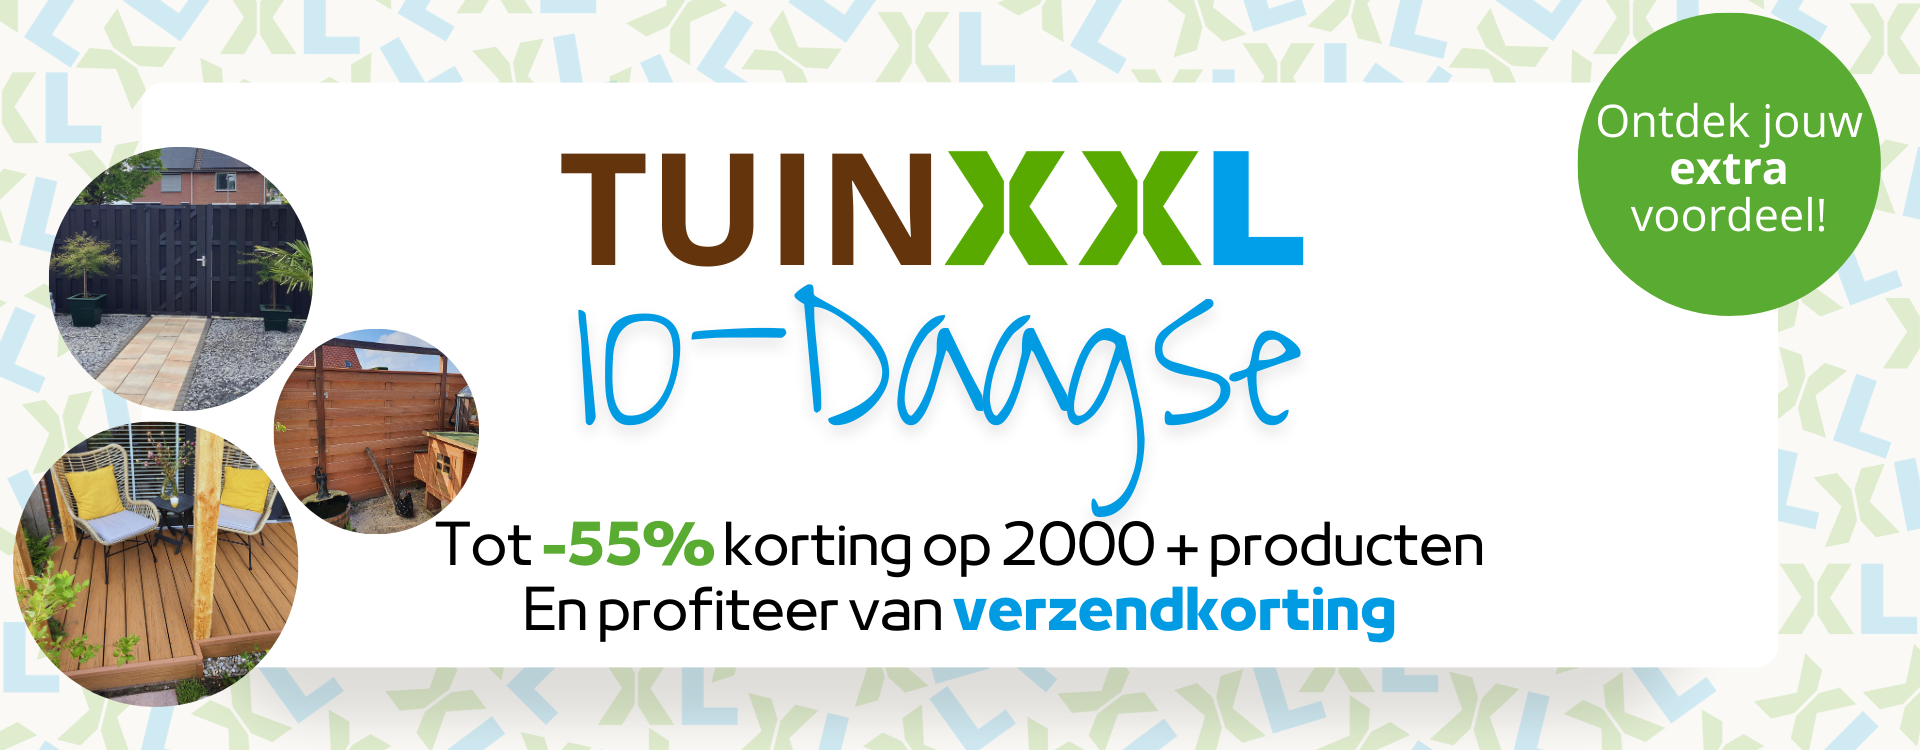 tuinxl10daagse